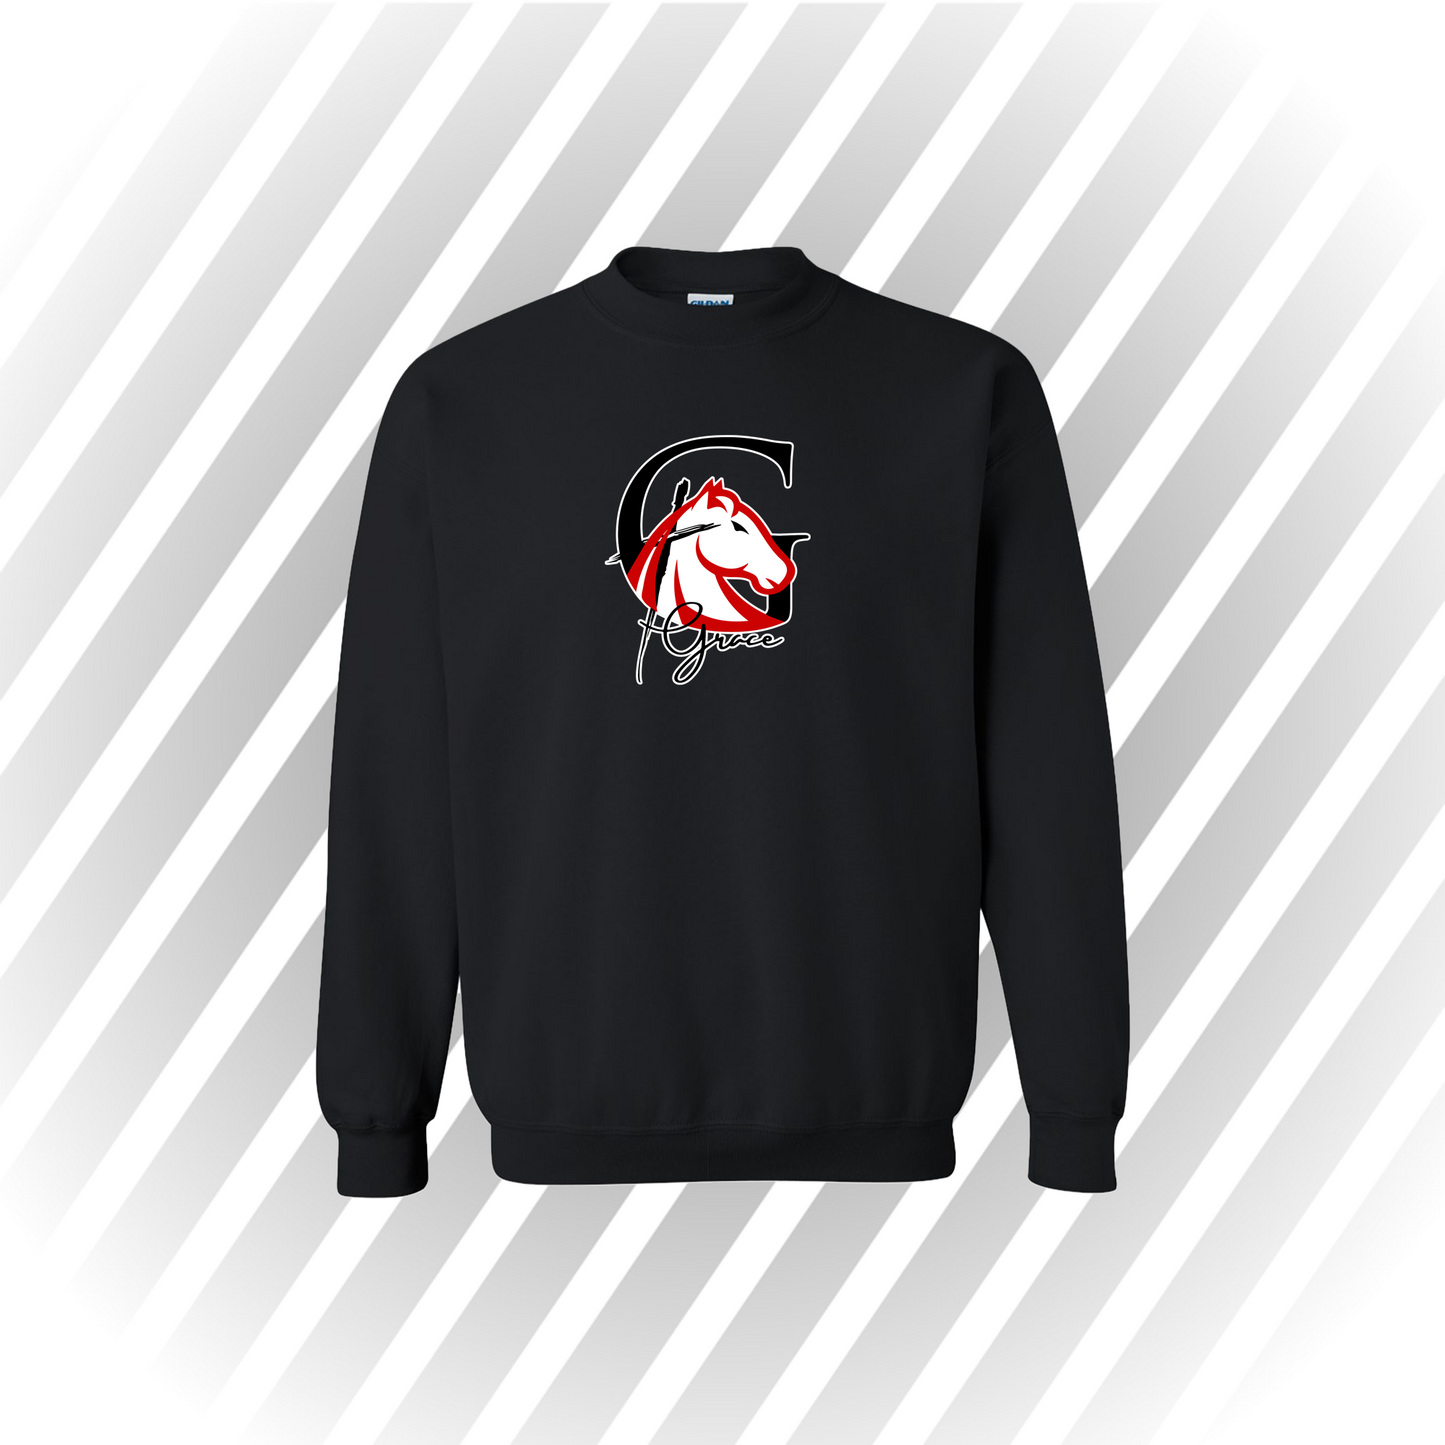 Grace Emblem - Crewneck Sweater